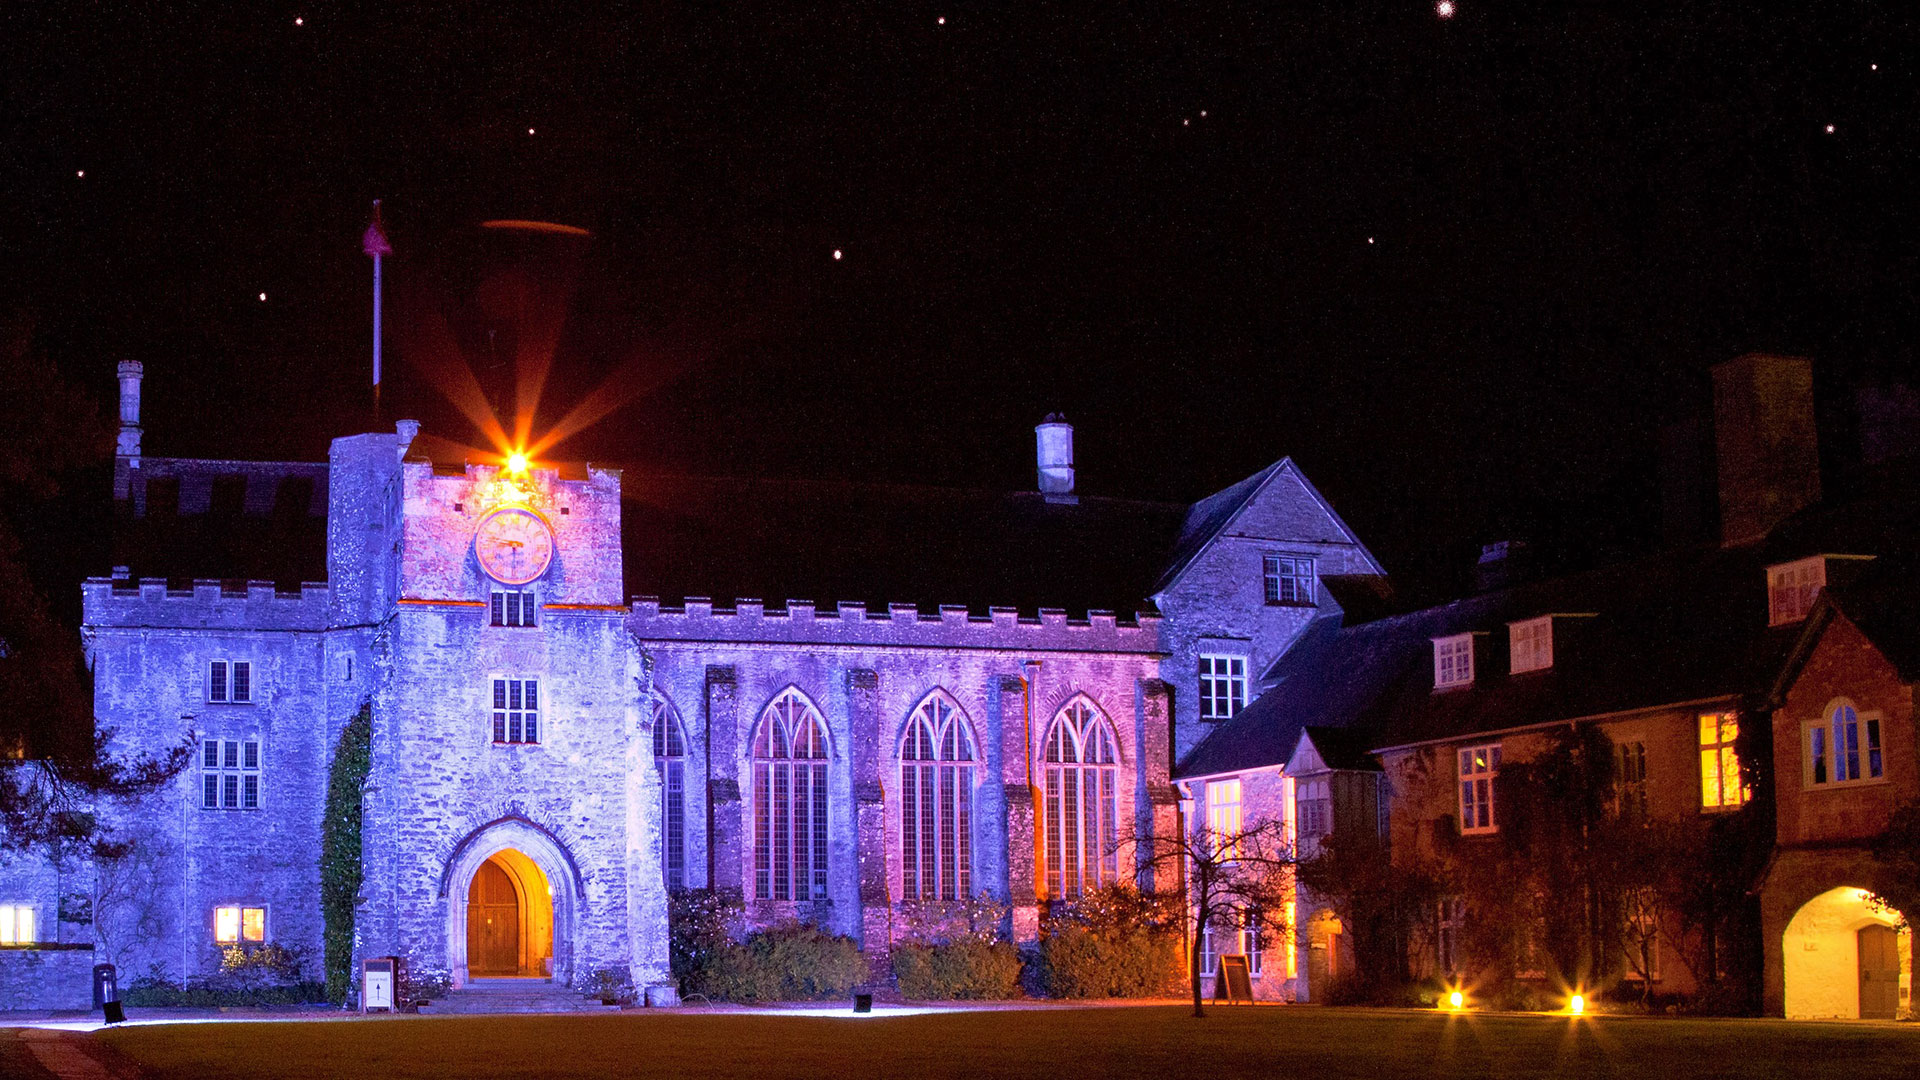 Medieval clock tower at night - Dartington Hall Hotel, South Devon